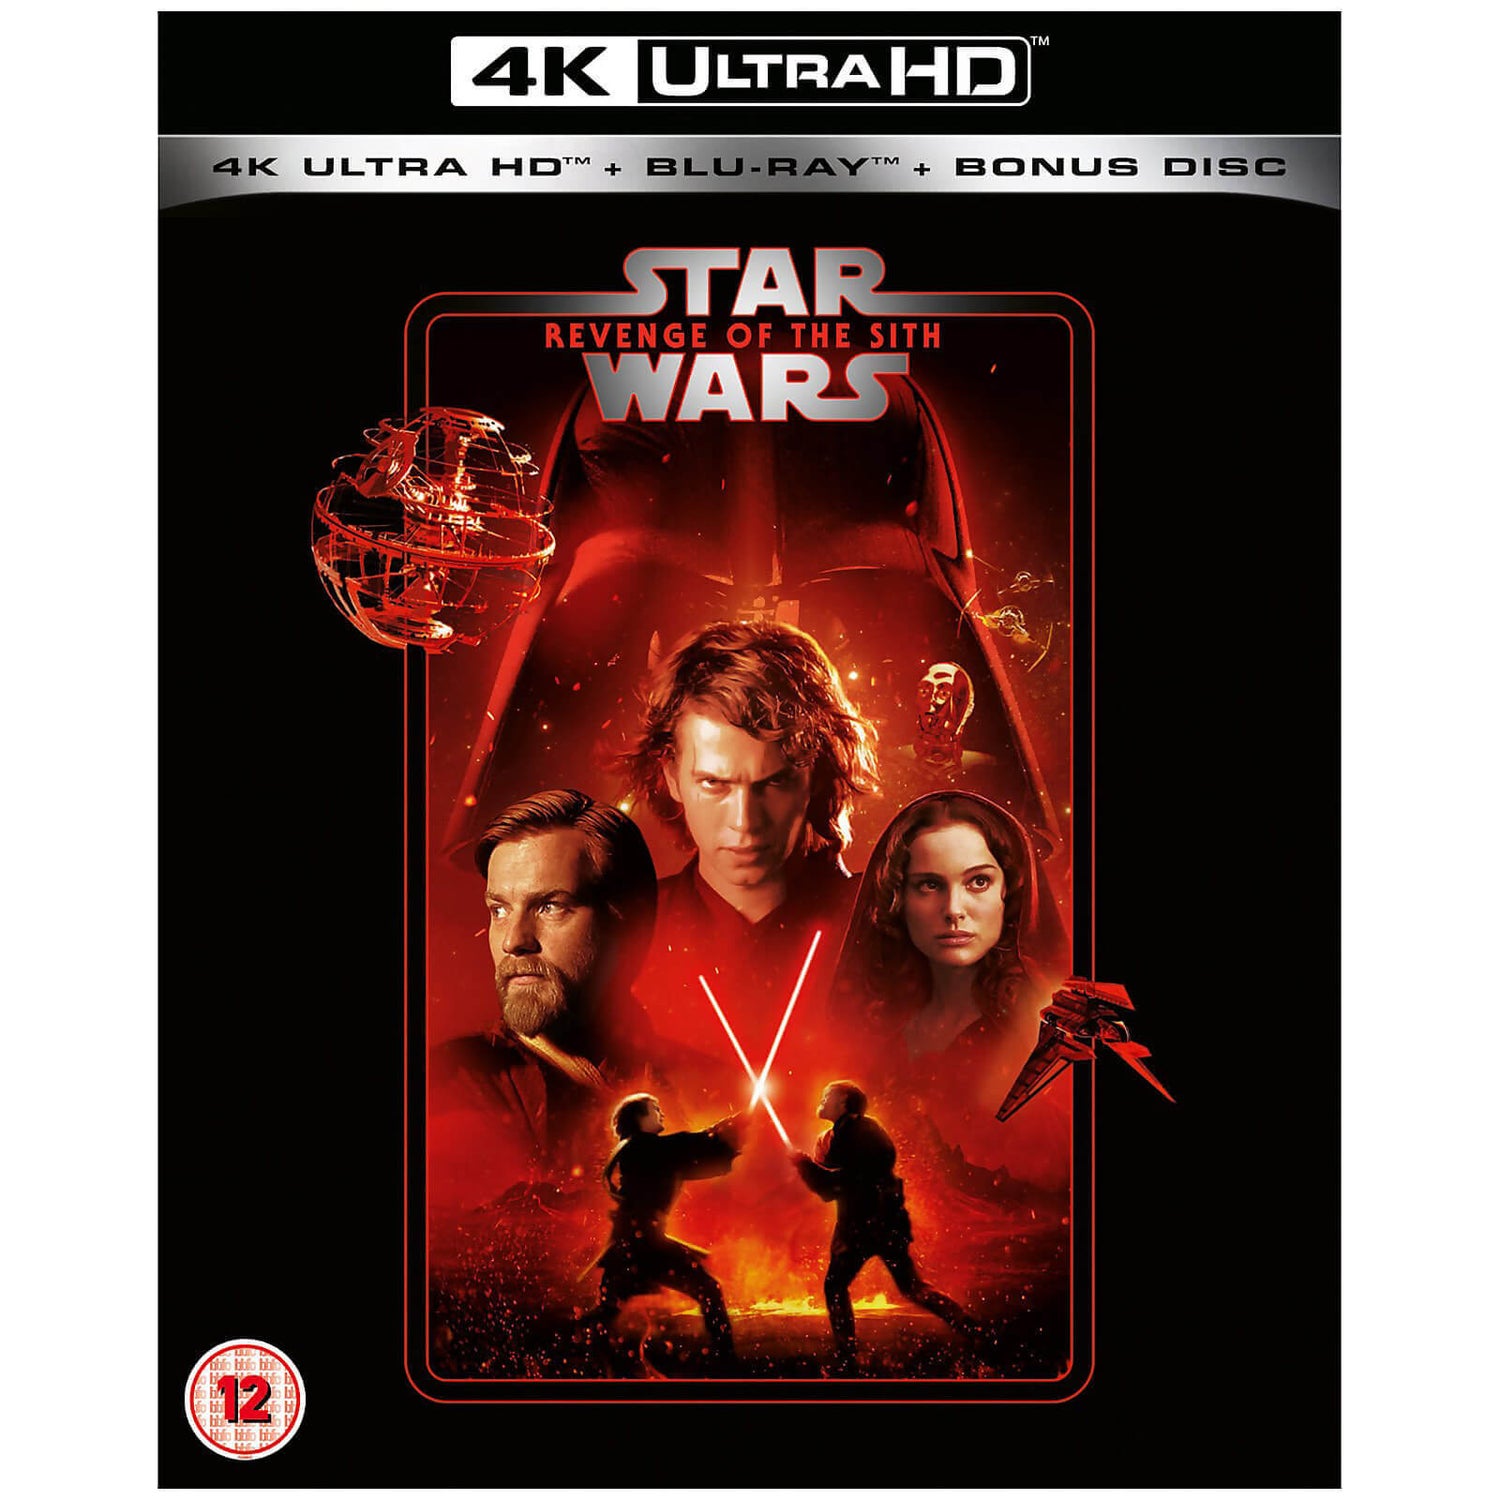 Star Wars - Episode III - Revenge of the Sith - 4K Ultra HD (Includes 2D Blu -ray) 4K - Zavvi UK